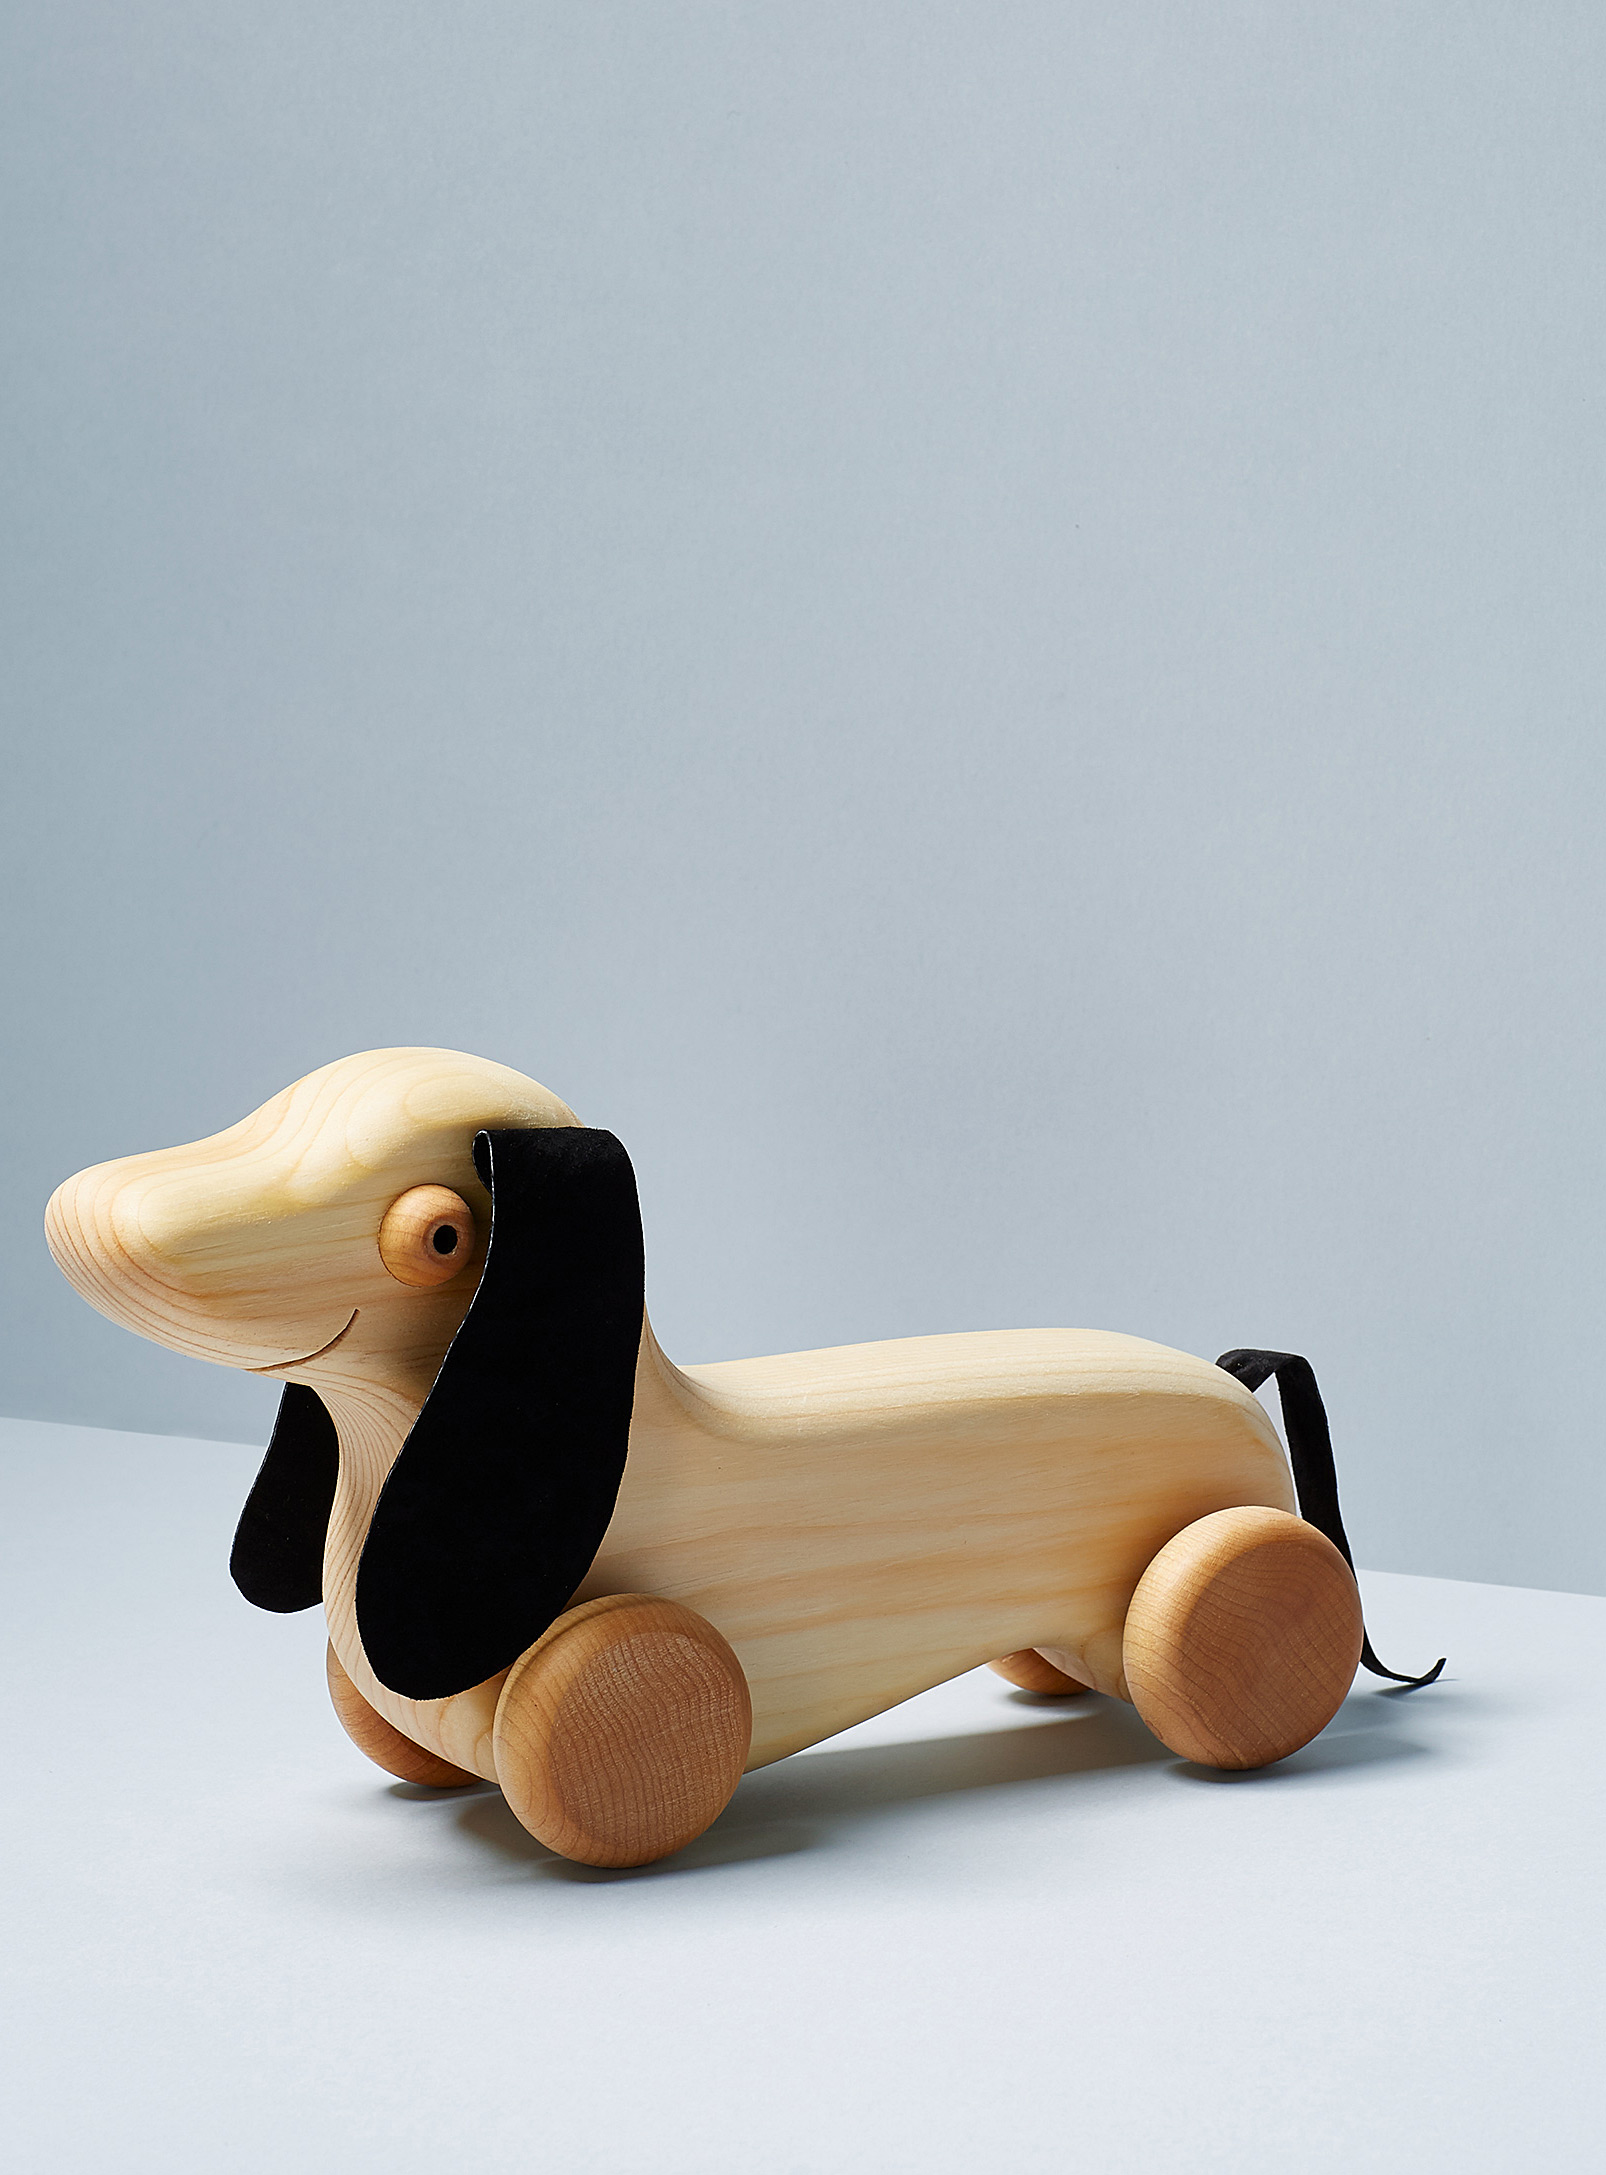 Atelier cheval de bois - Maurice the dachshund